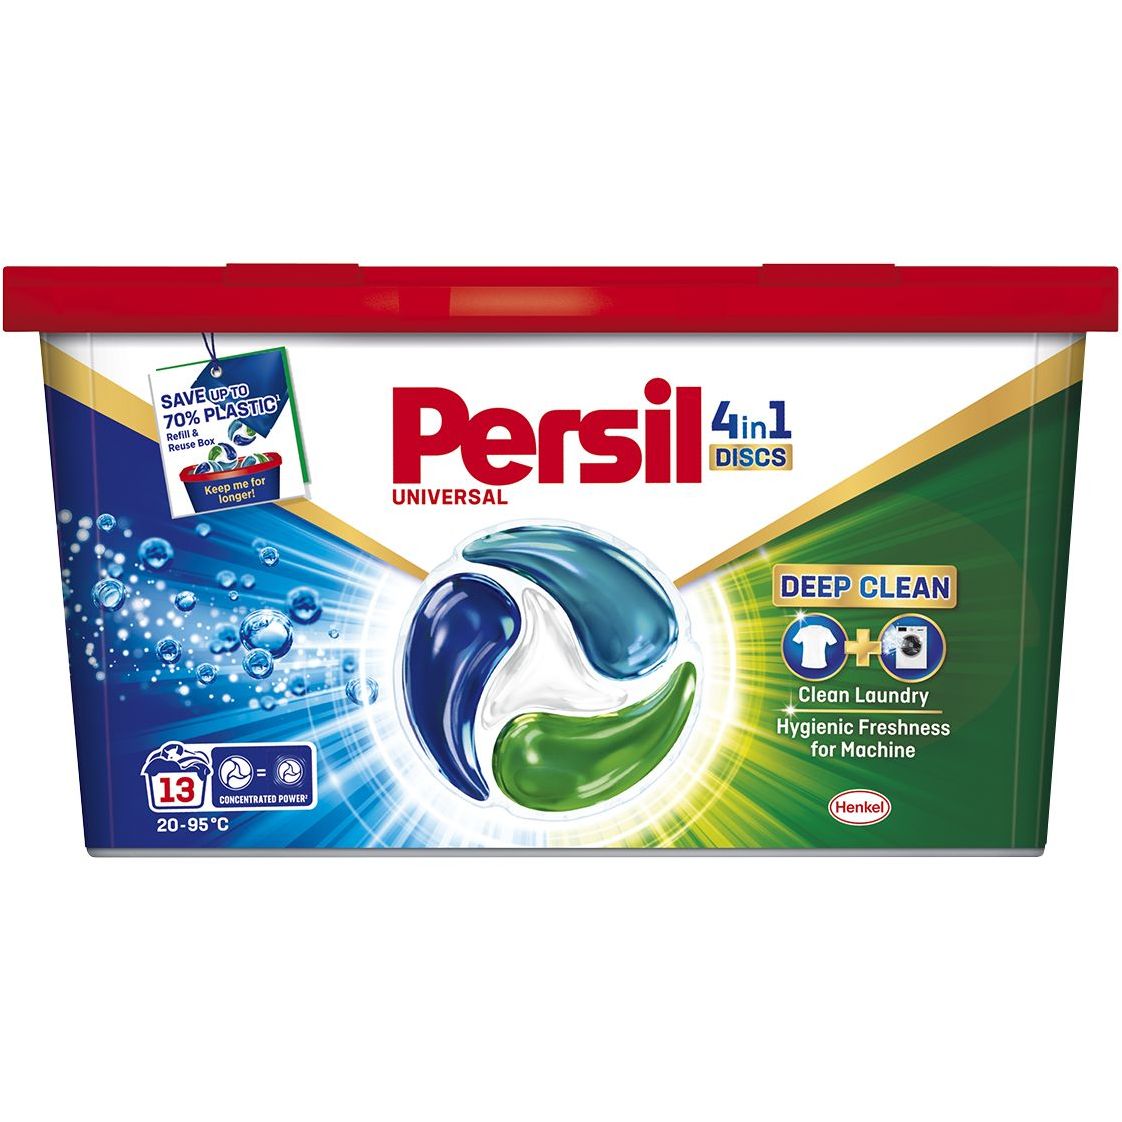 Диски для стирки Persil Deep Clean Universal 4 in 1 Discs 13 шт. - фото 1